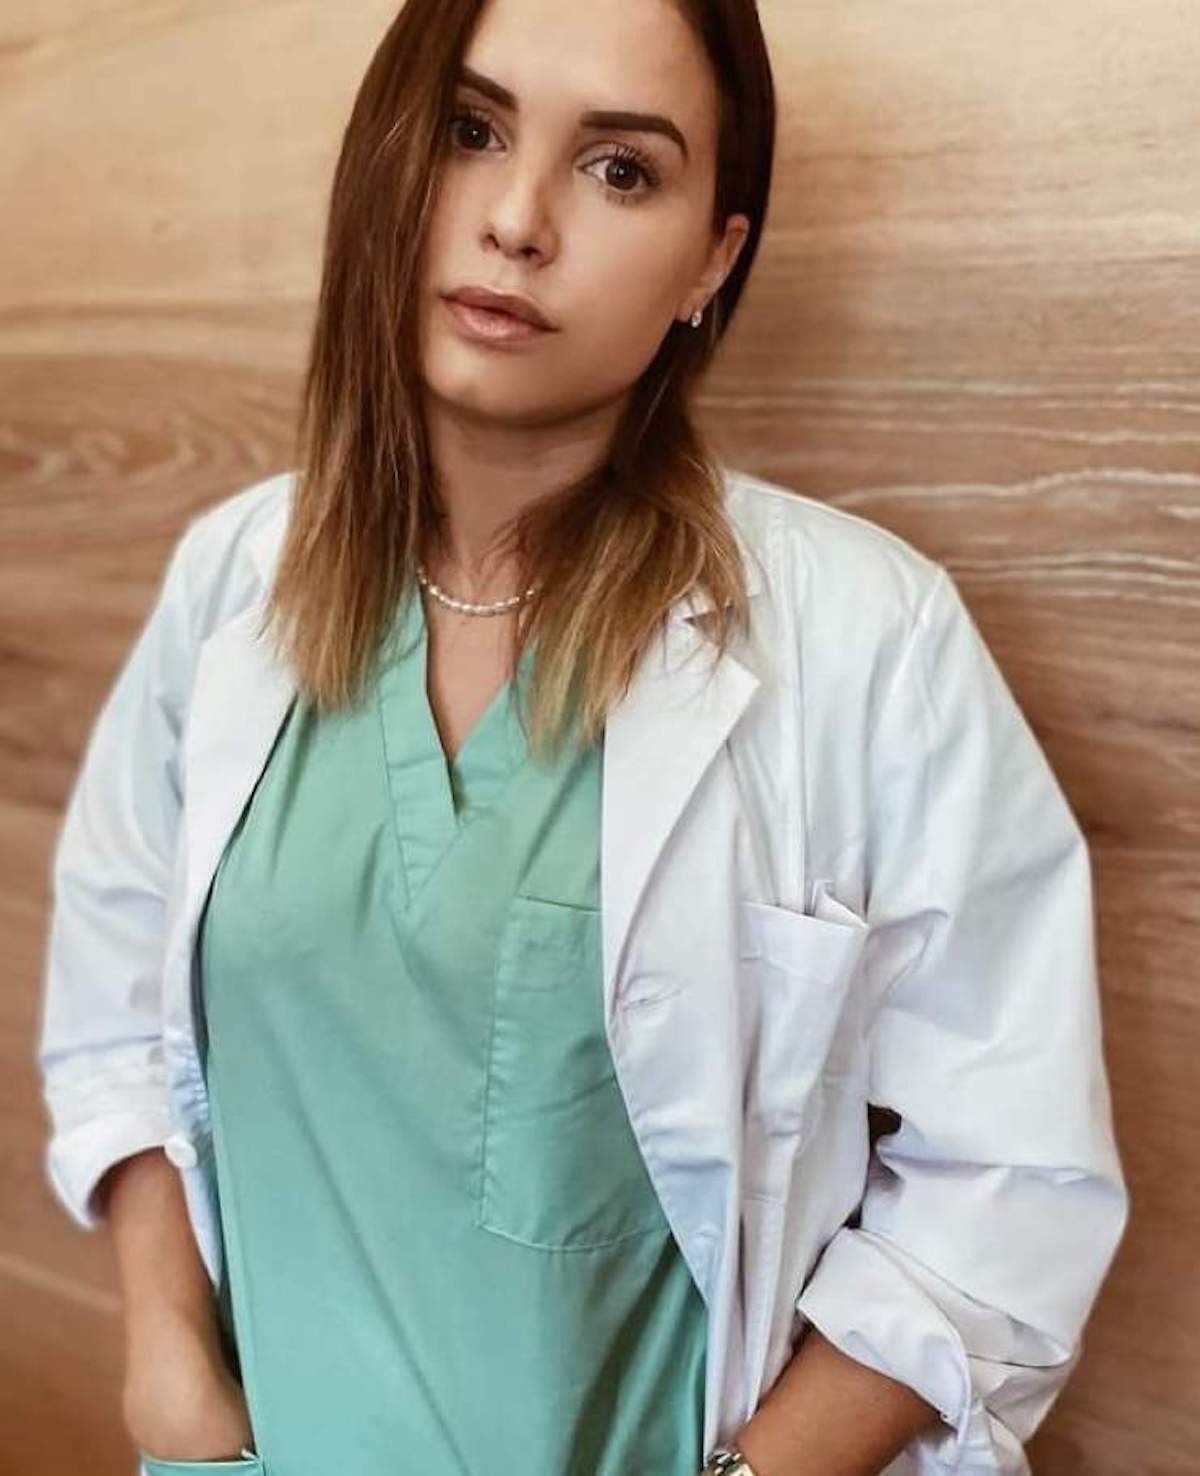 Marta Pasqualato UeD medico GF Vip